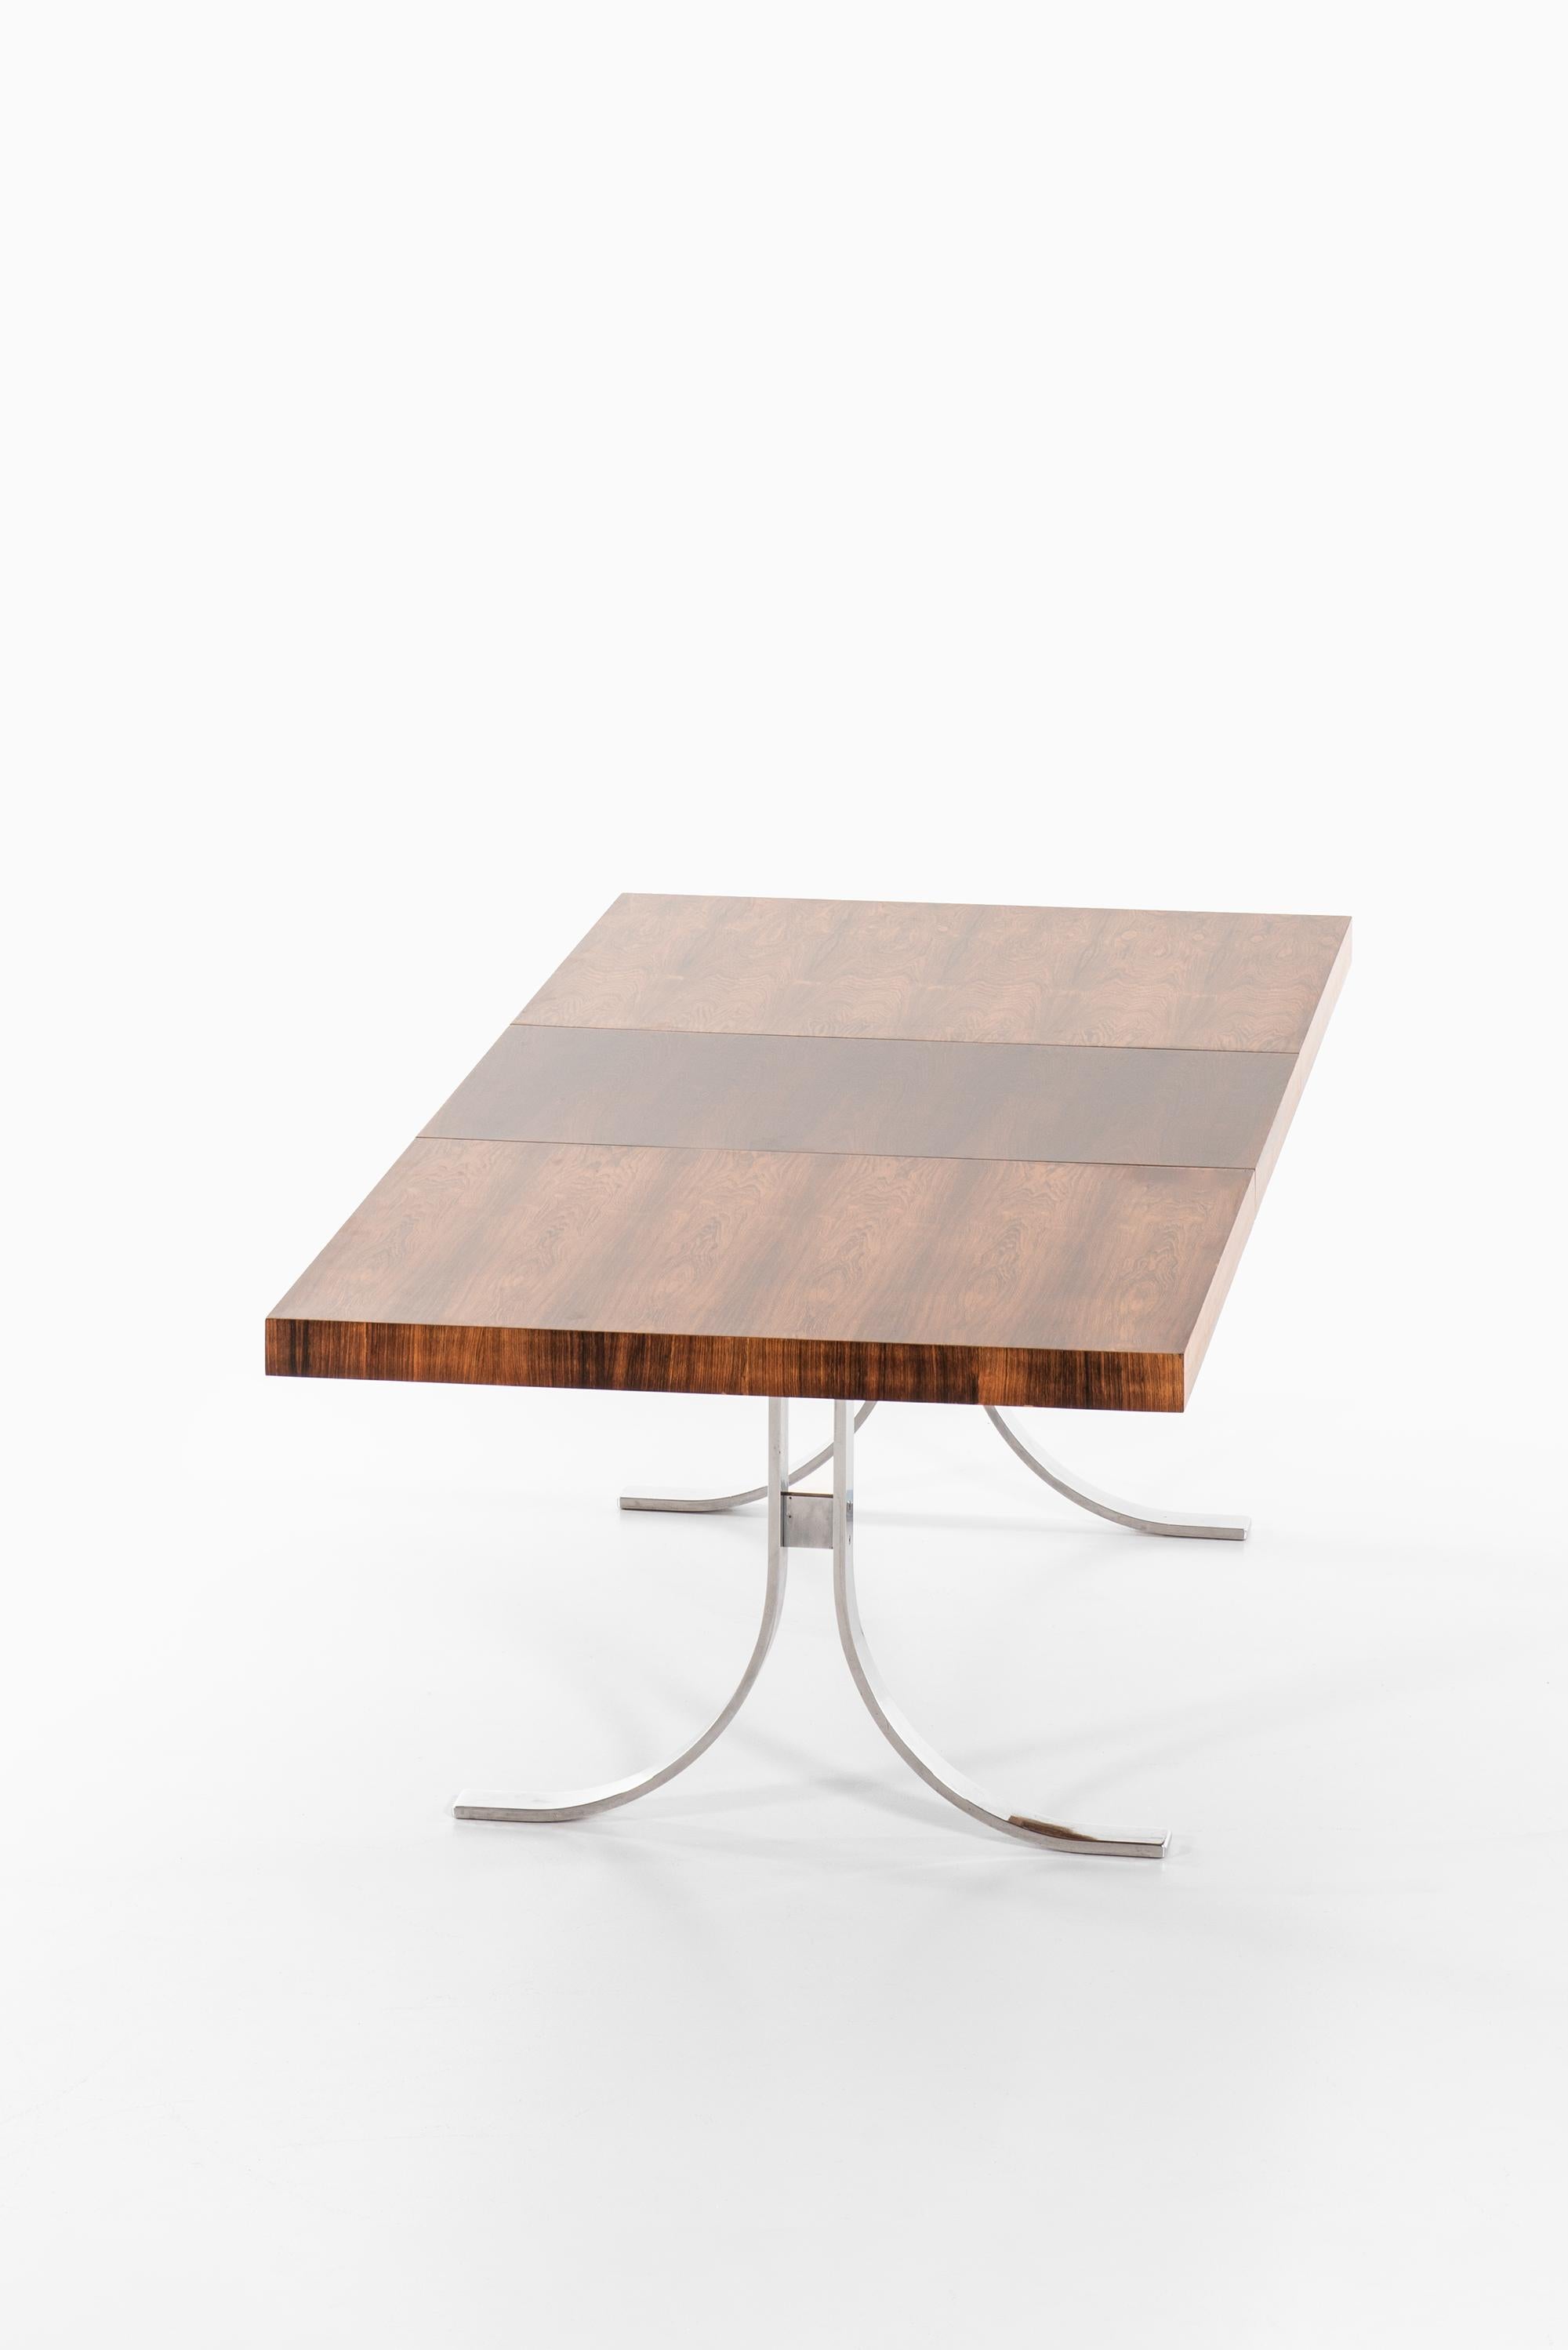 Danish Poul Nørreklit Dining Table by Selectform in Denmark For Sale